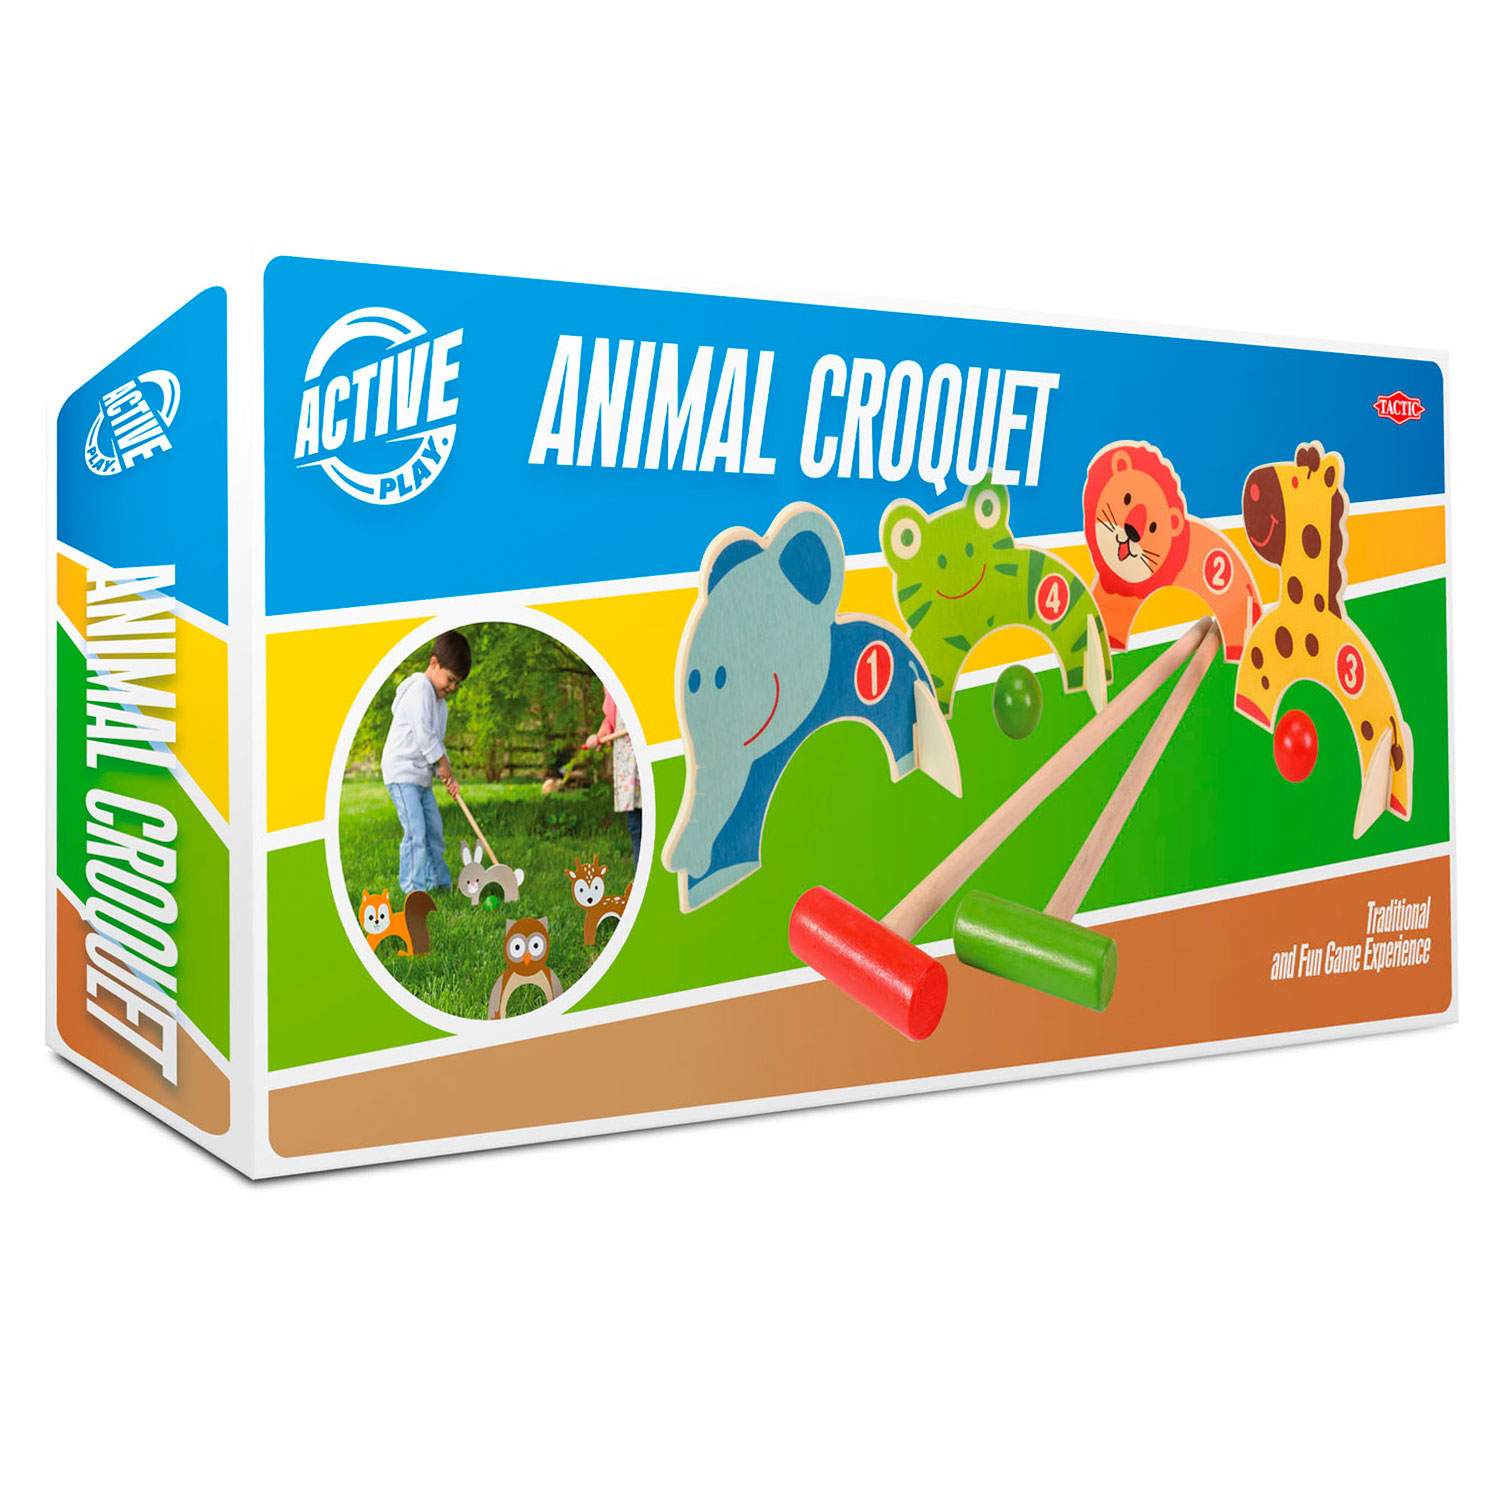 Toyssa Wooden Cartoon Animals Croquet Set Educational Toys Outdoor Games for Kids 